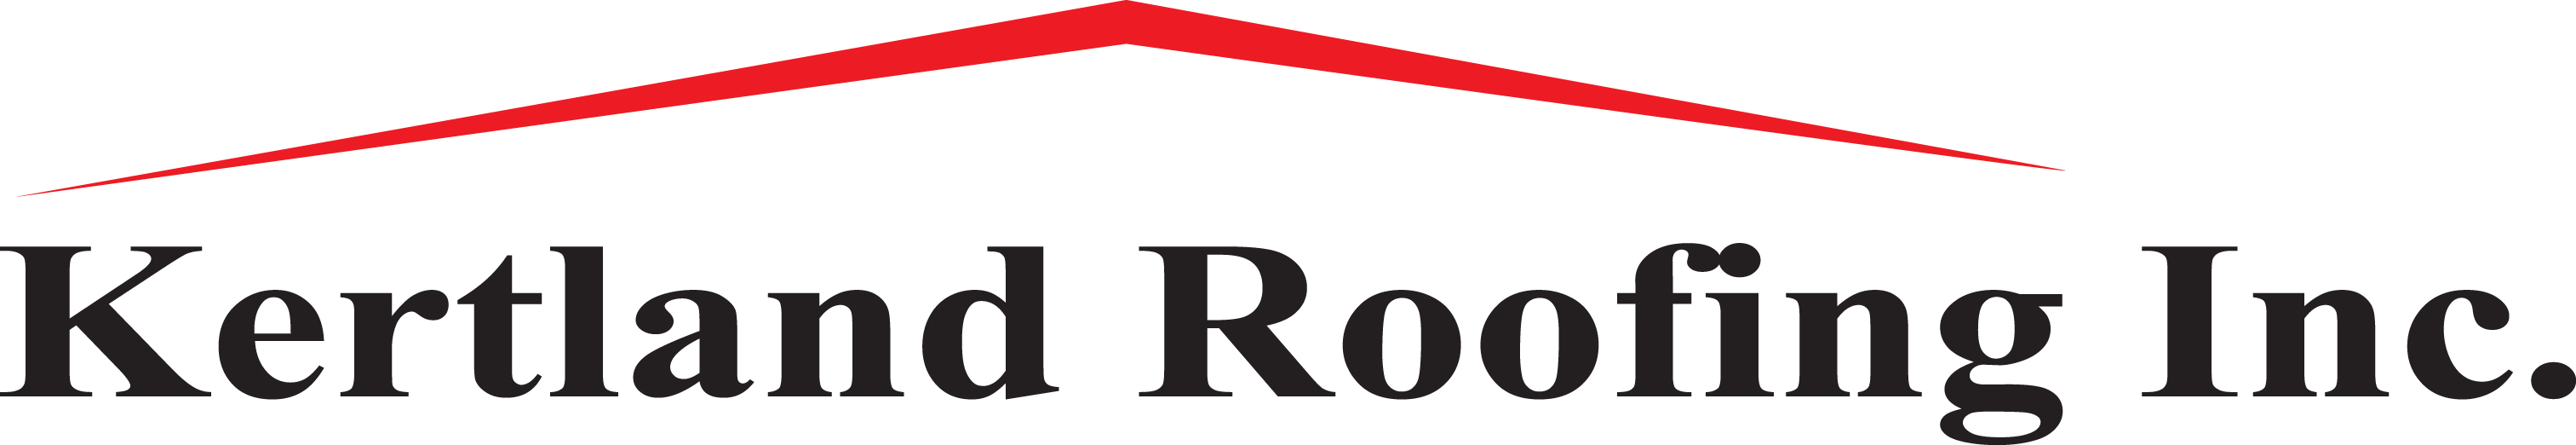 Kertland Roofing, Inc. Logo